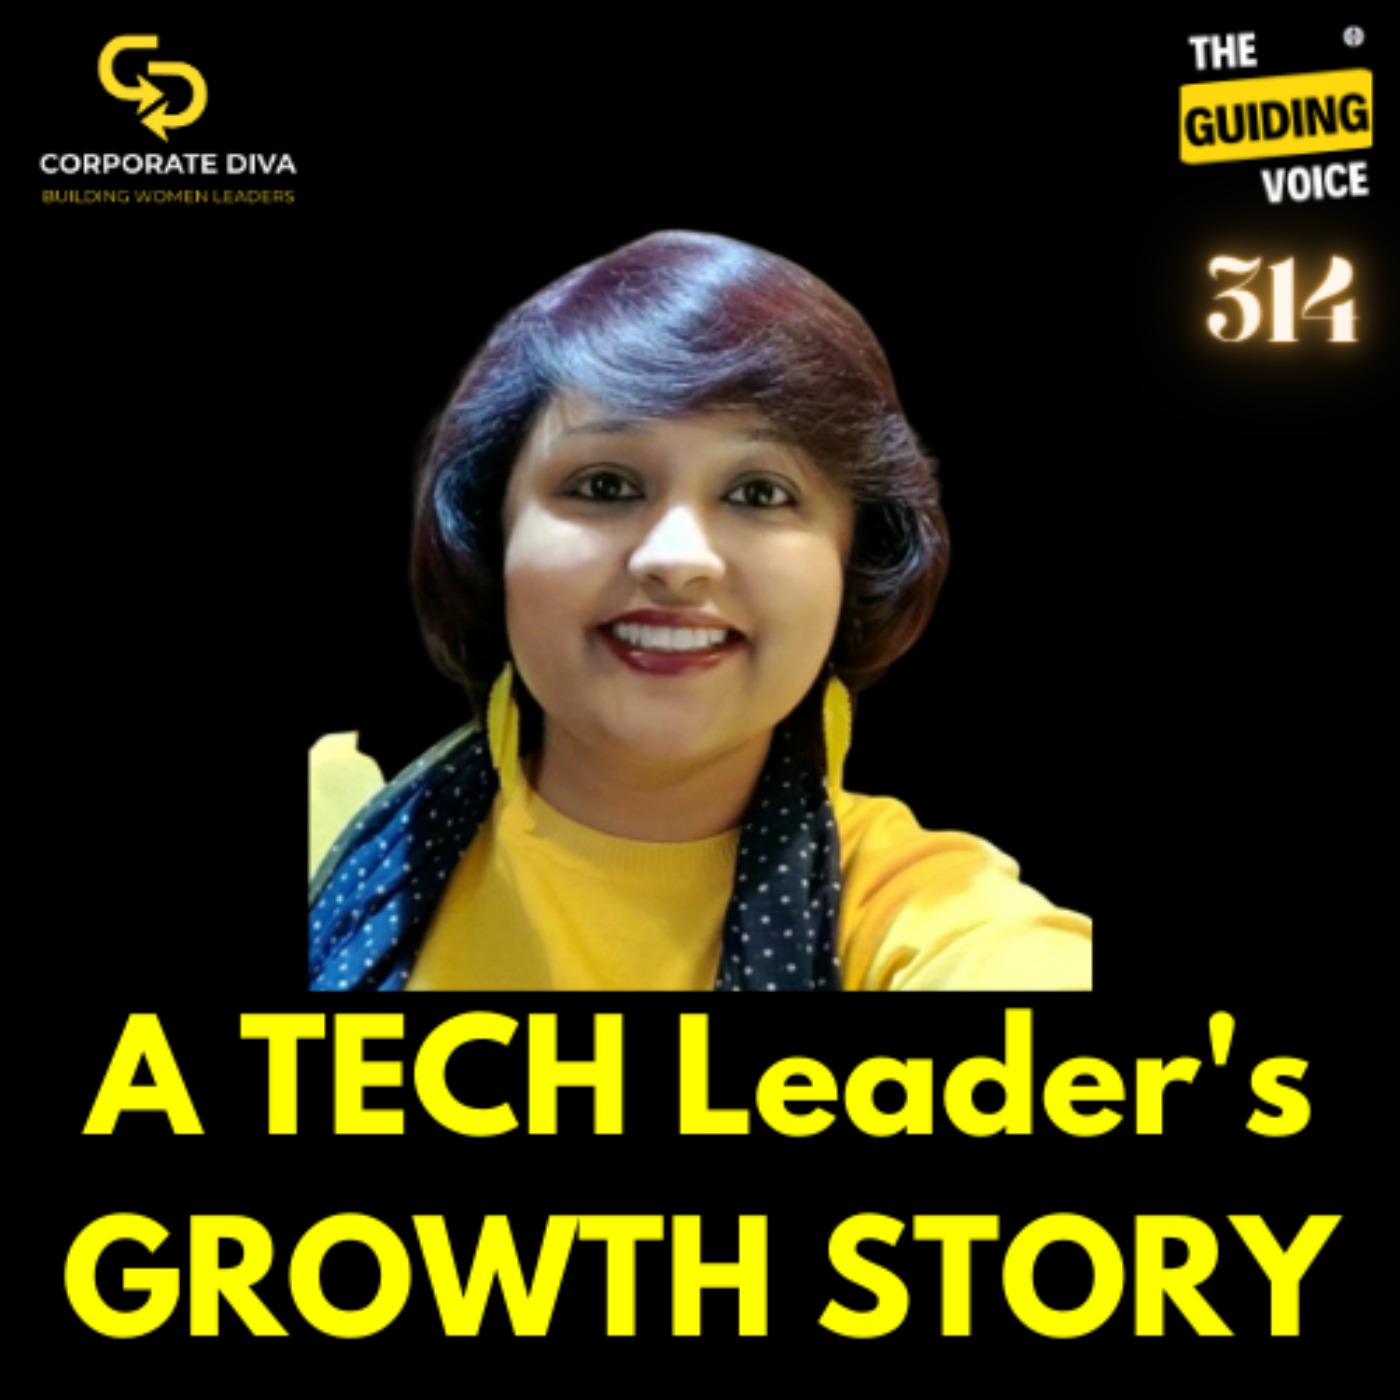 A tech leader’s GROWTH story | TGV Corporate Diva | Heena Saini | #TGV314